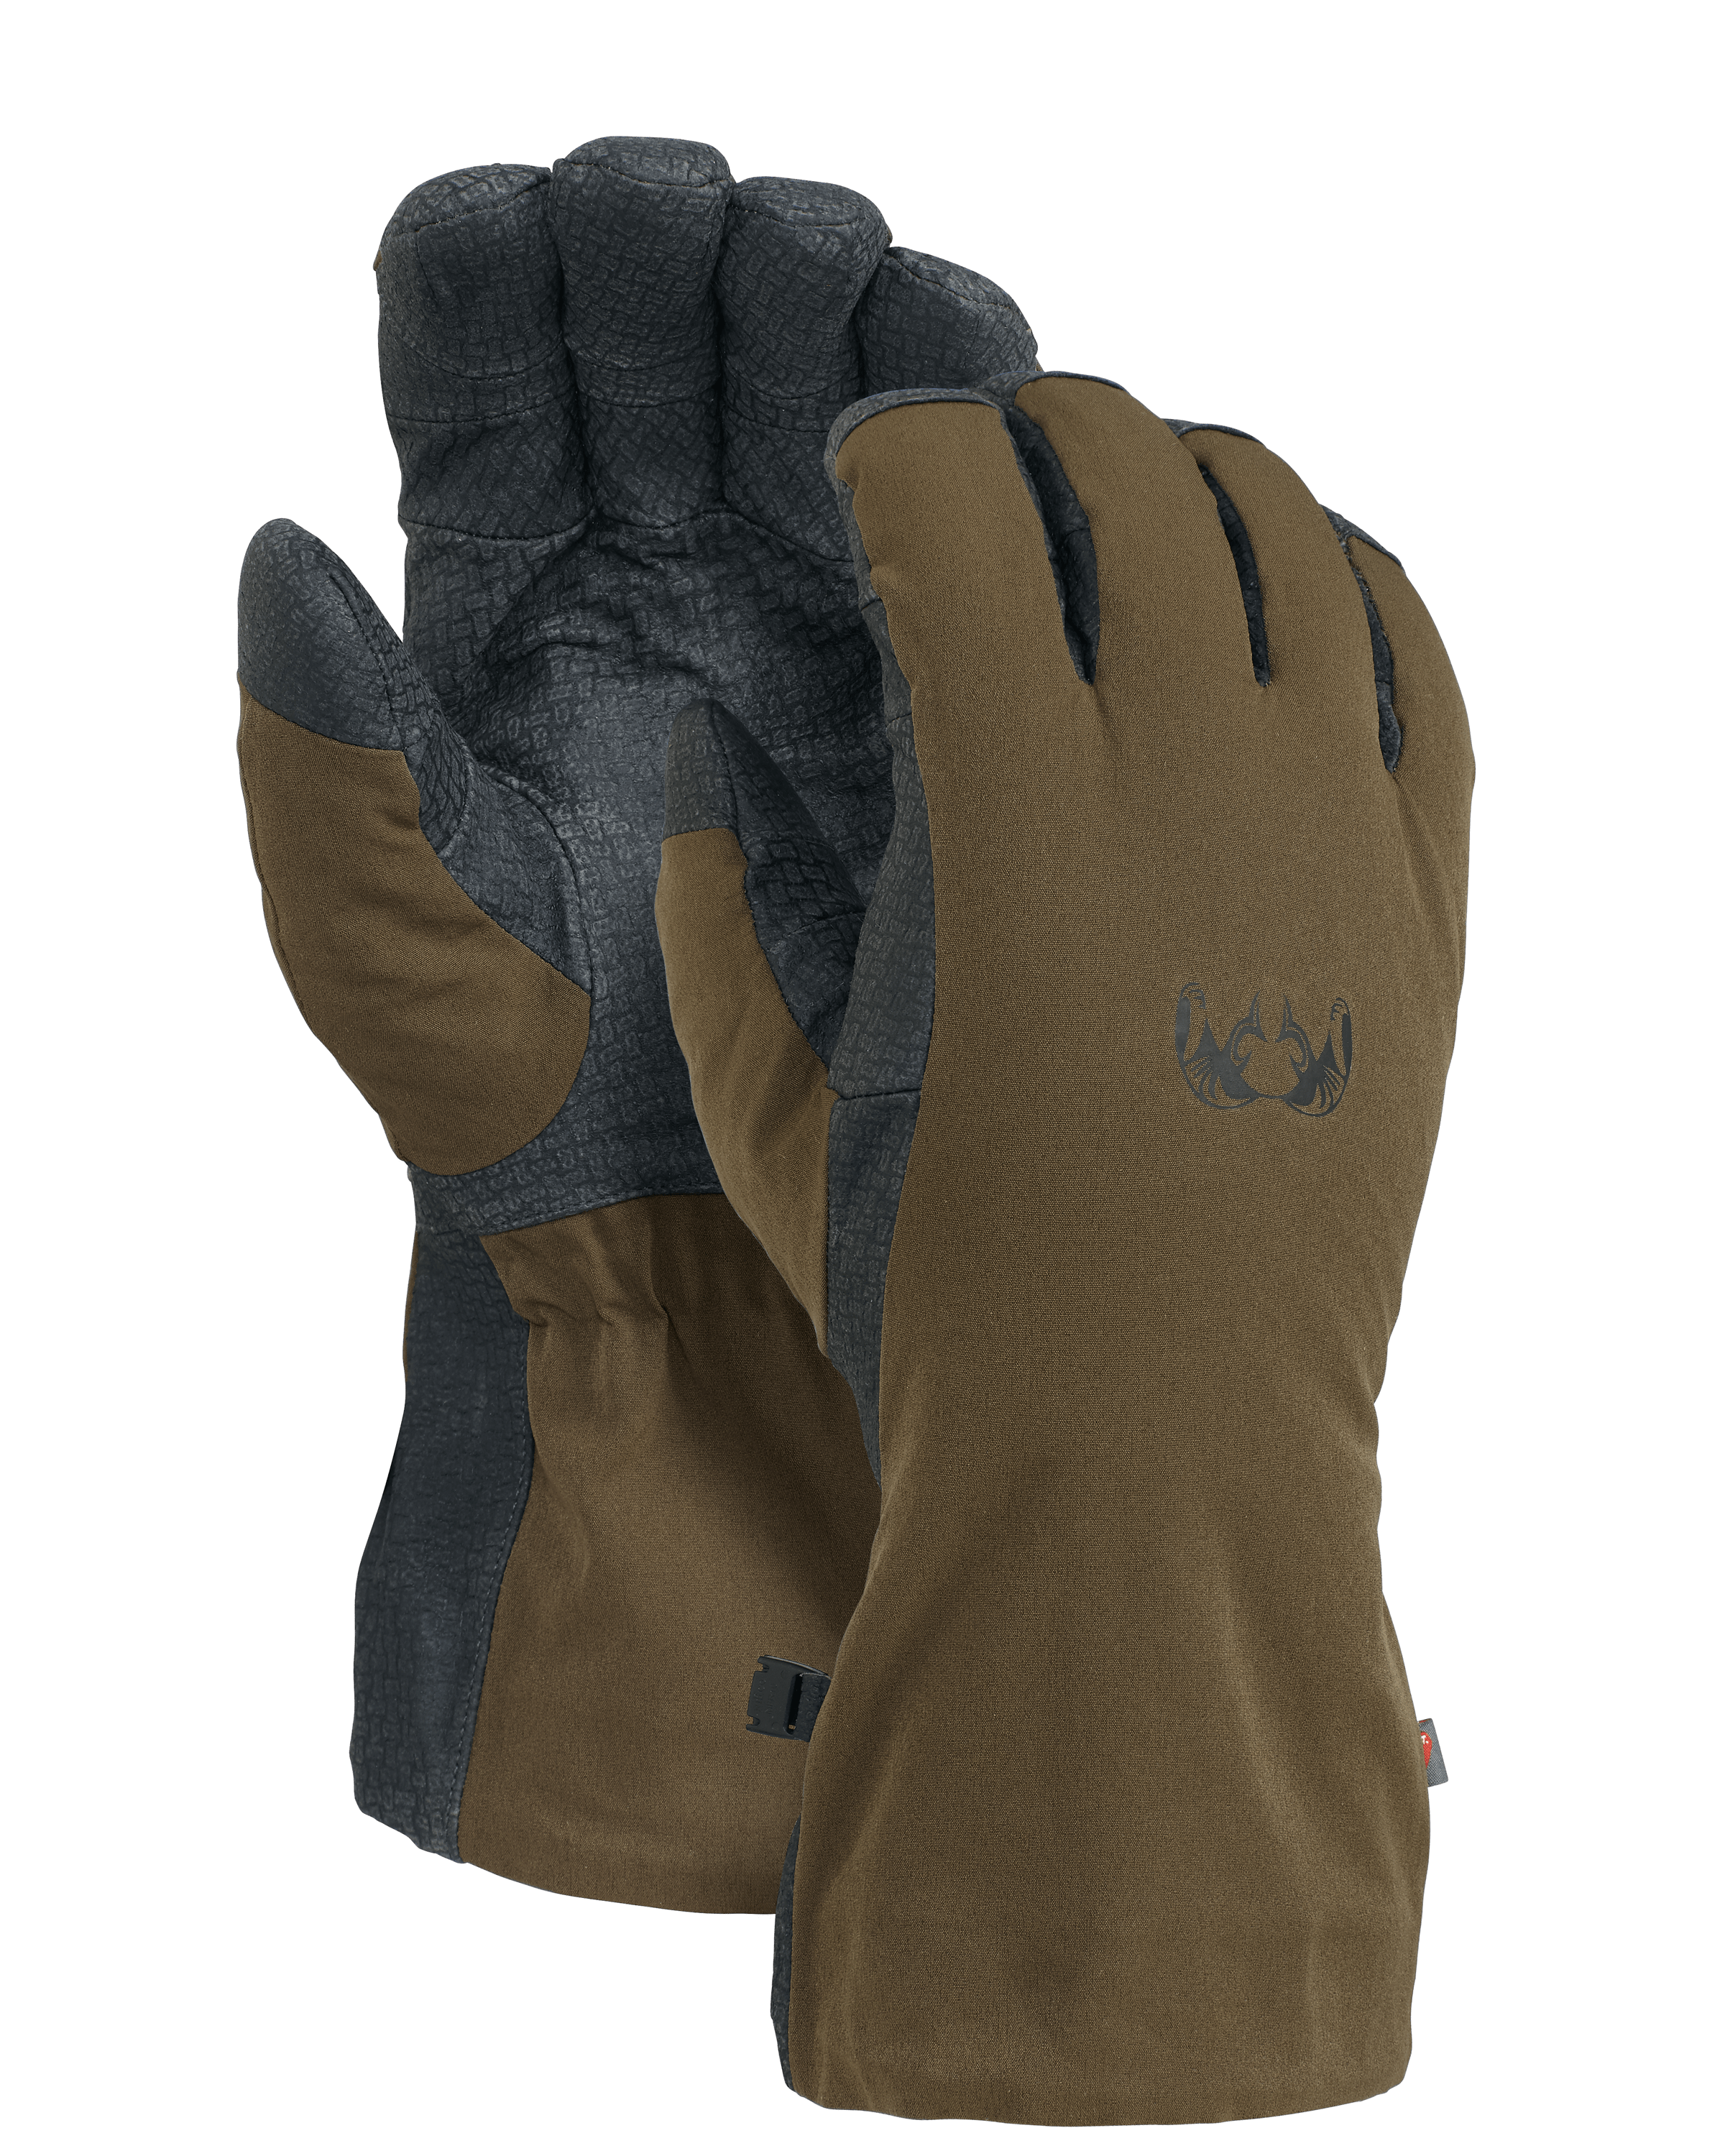 KUIU Northstar Hunting Glove in Bourbon | Size XL